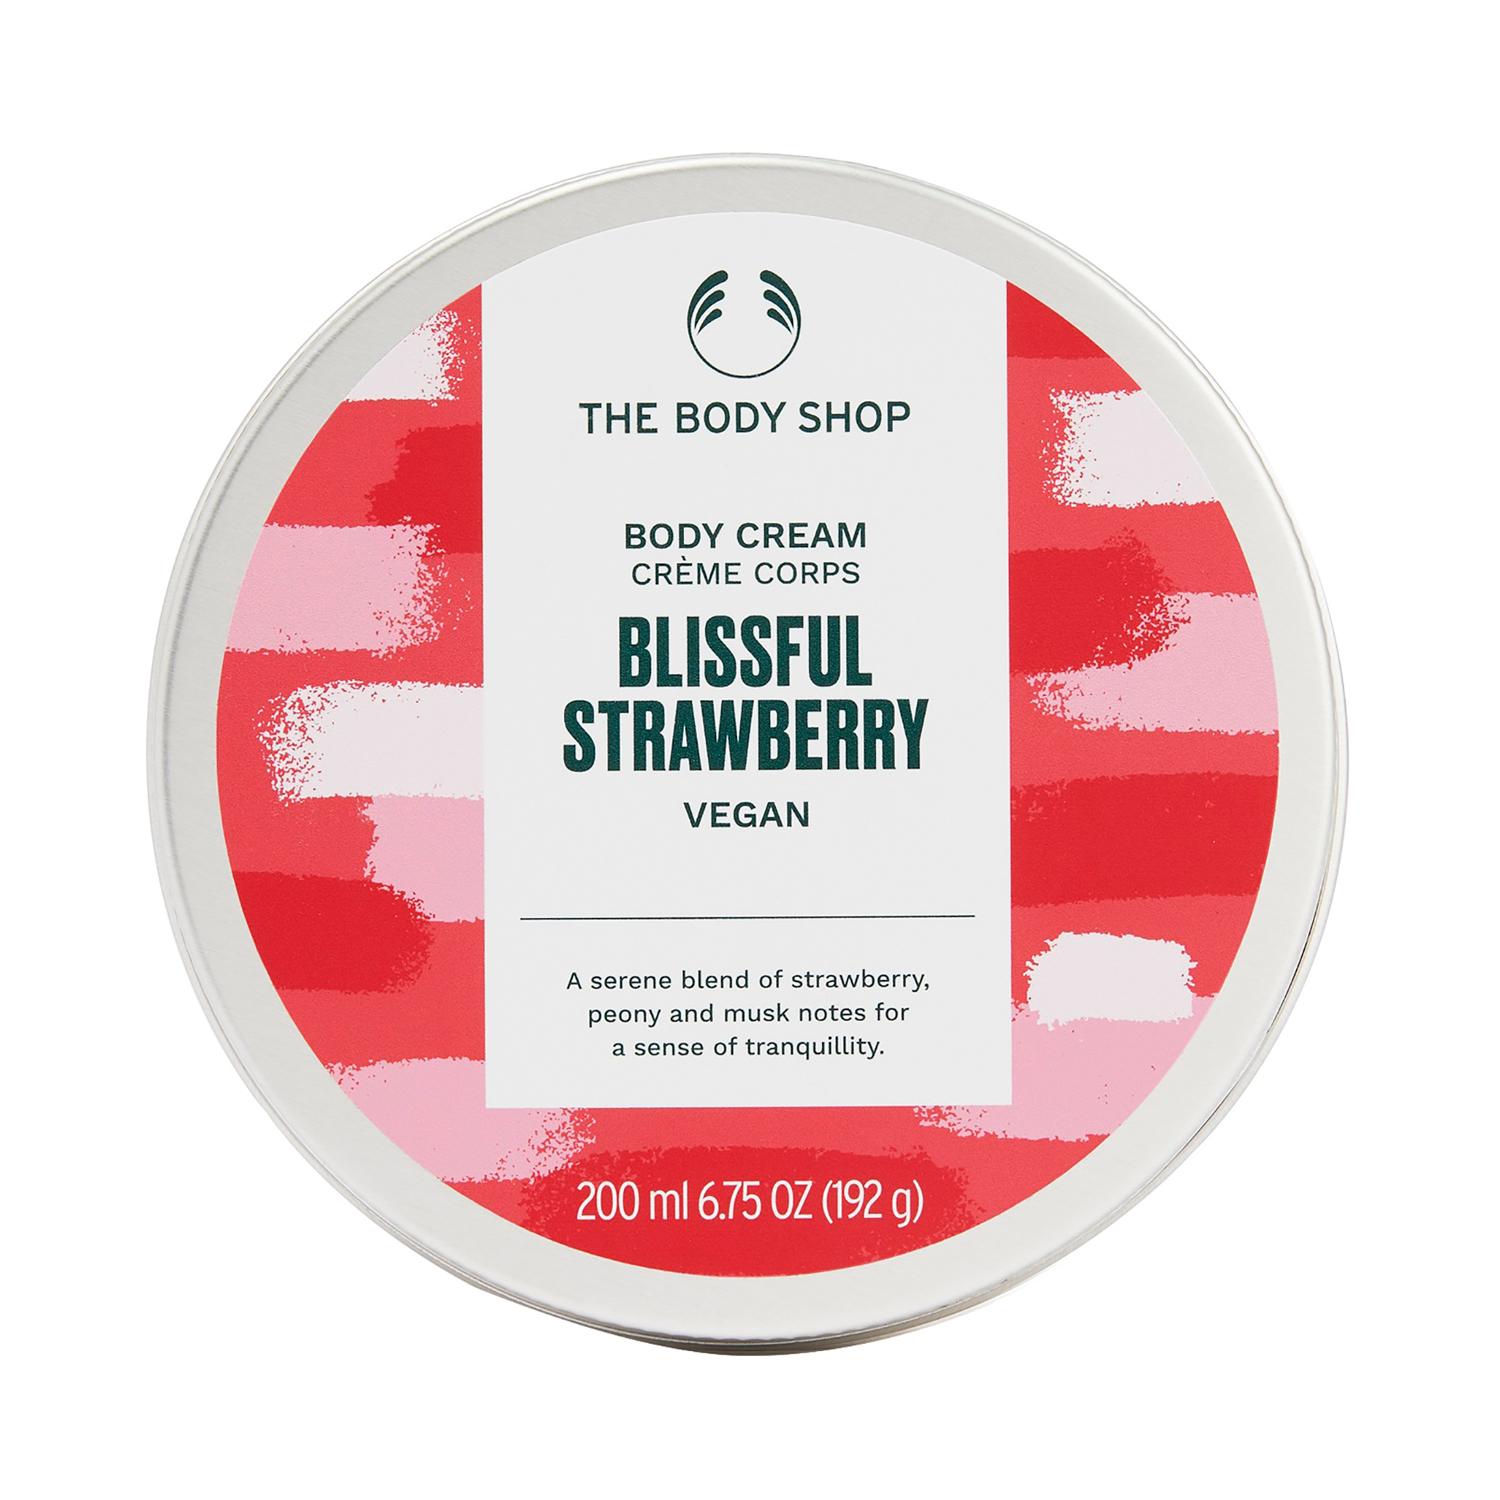 The Body Shop | The Body Shop Blissful Strawberry Body Cream (200ml)